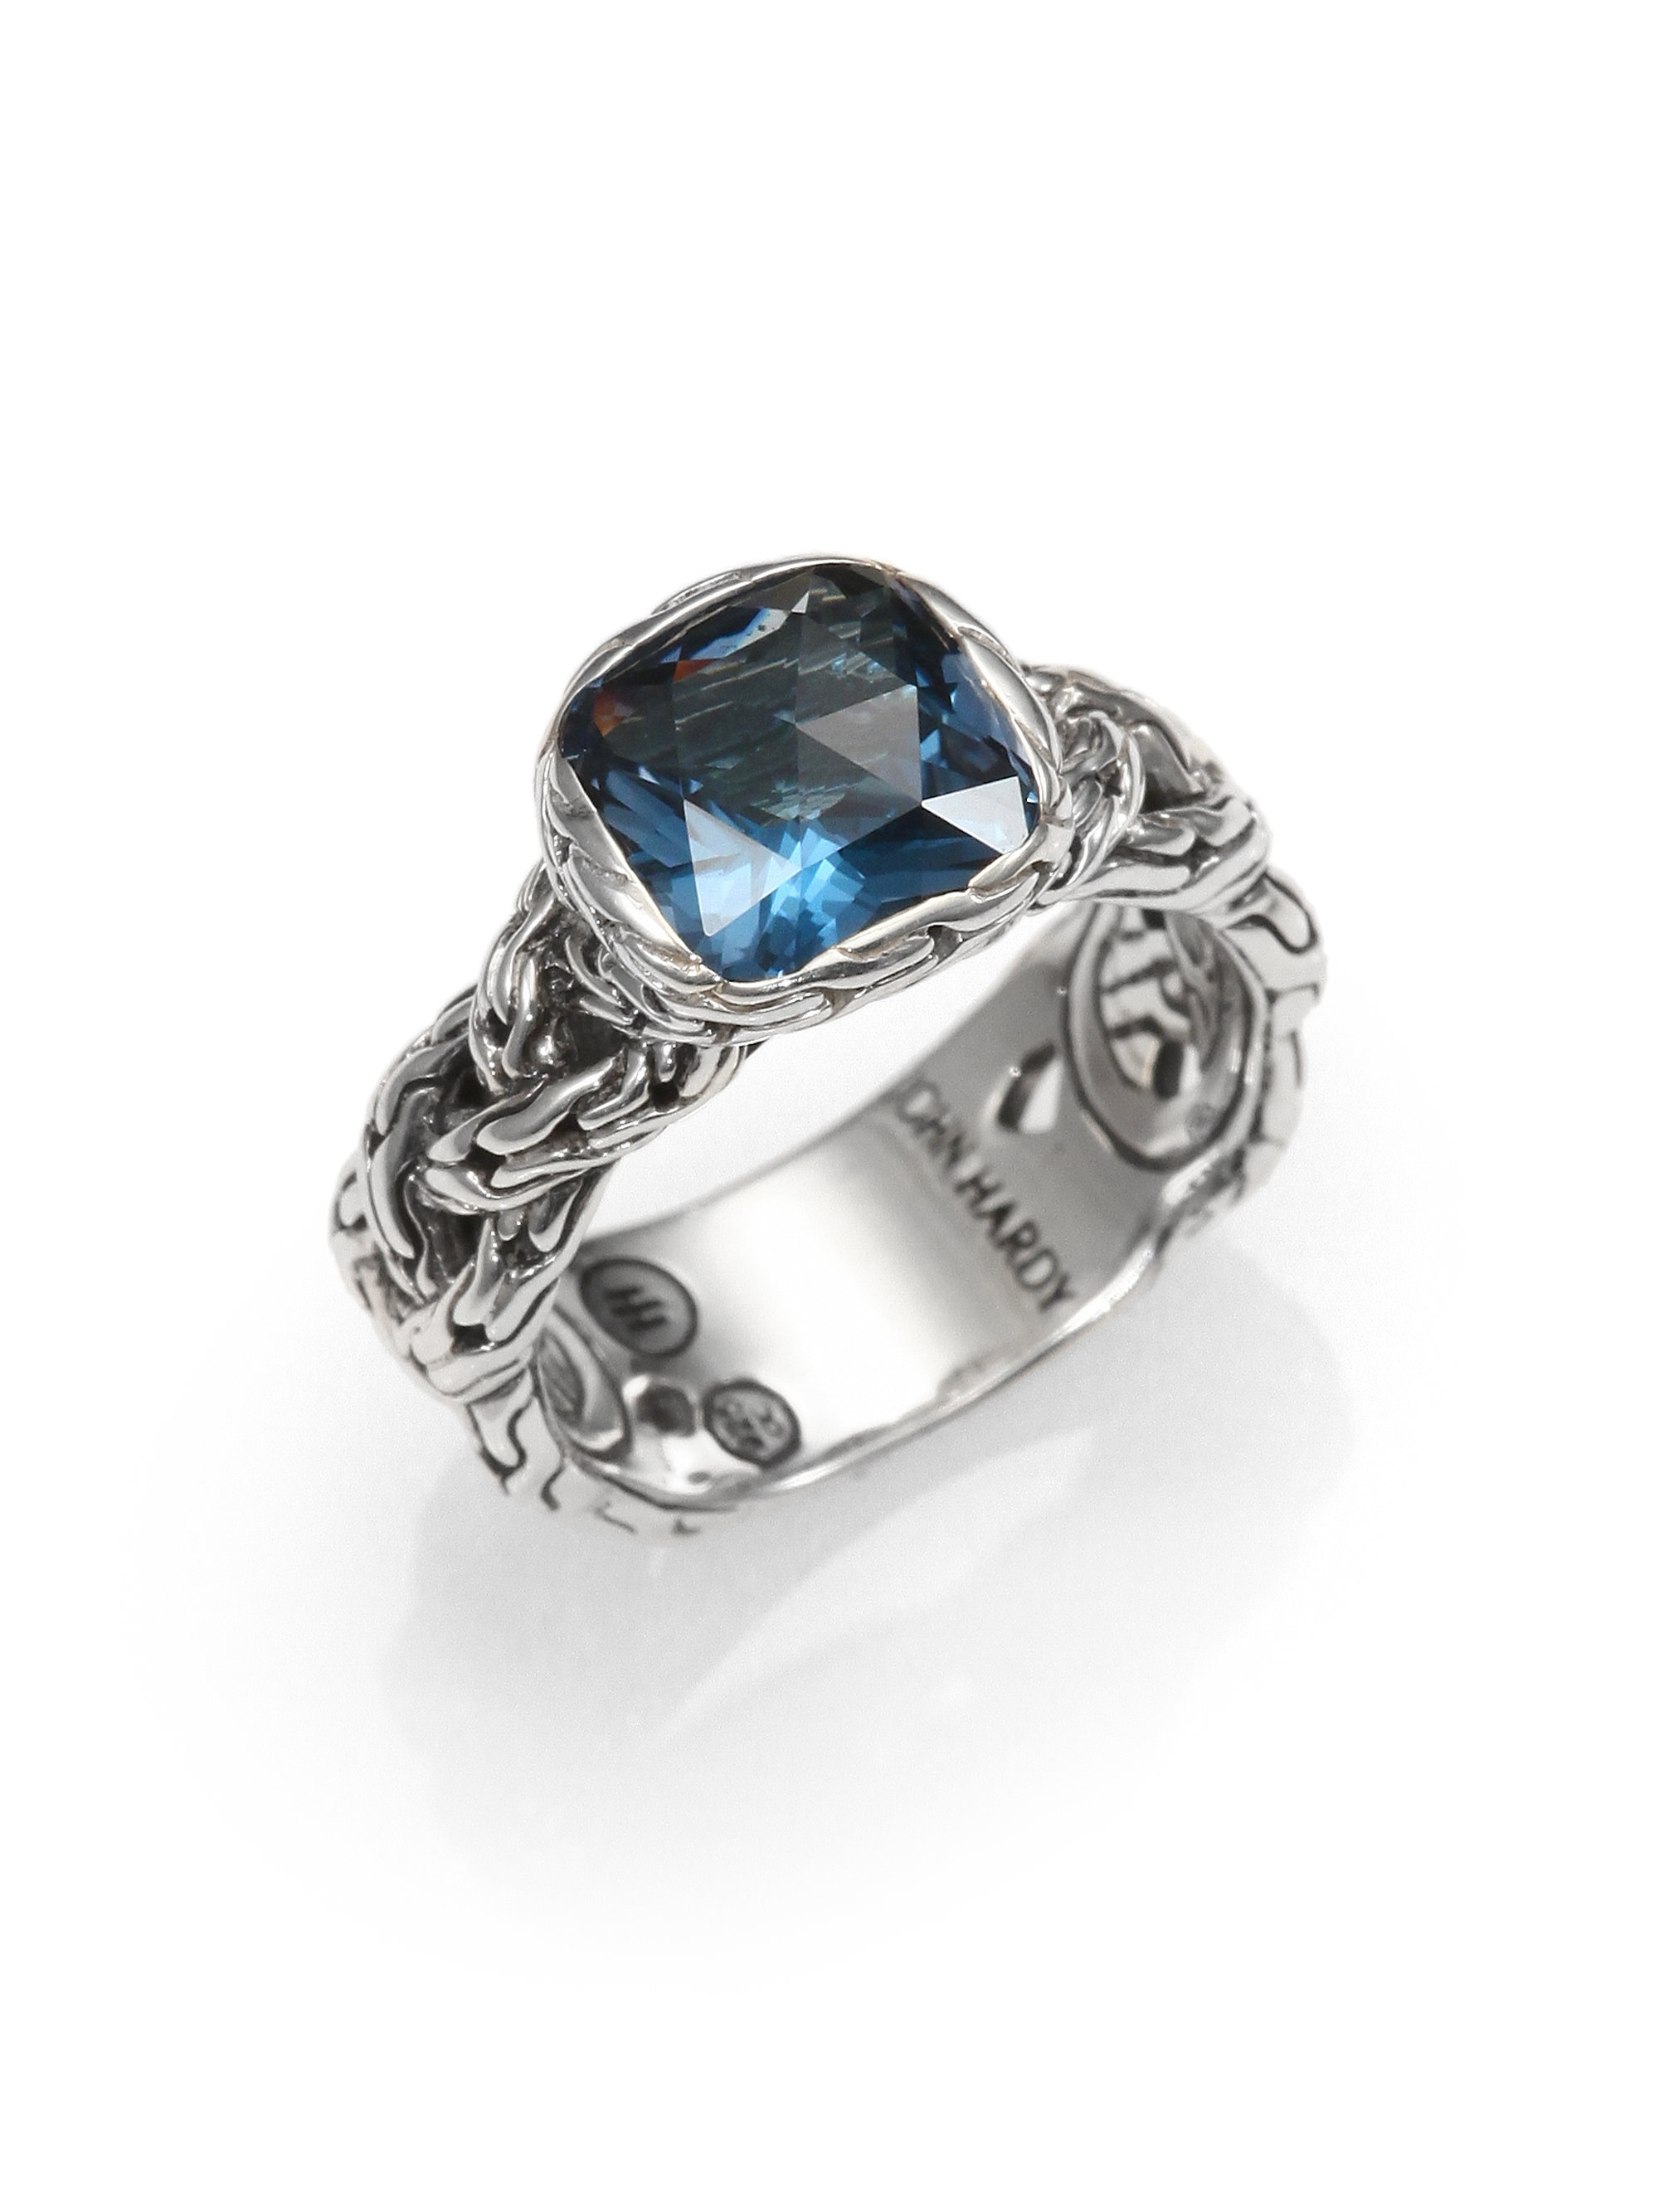 Sterling silver blue topaz rings - ulsdnorth